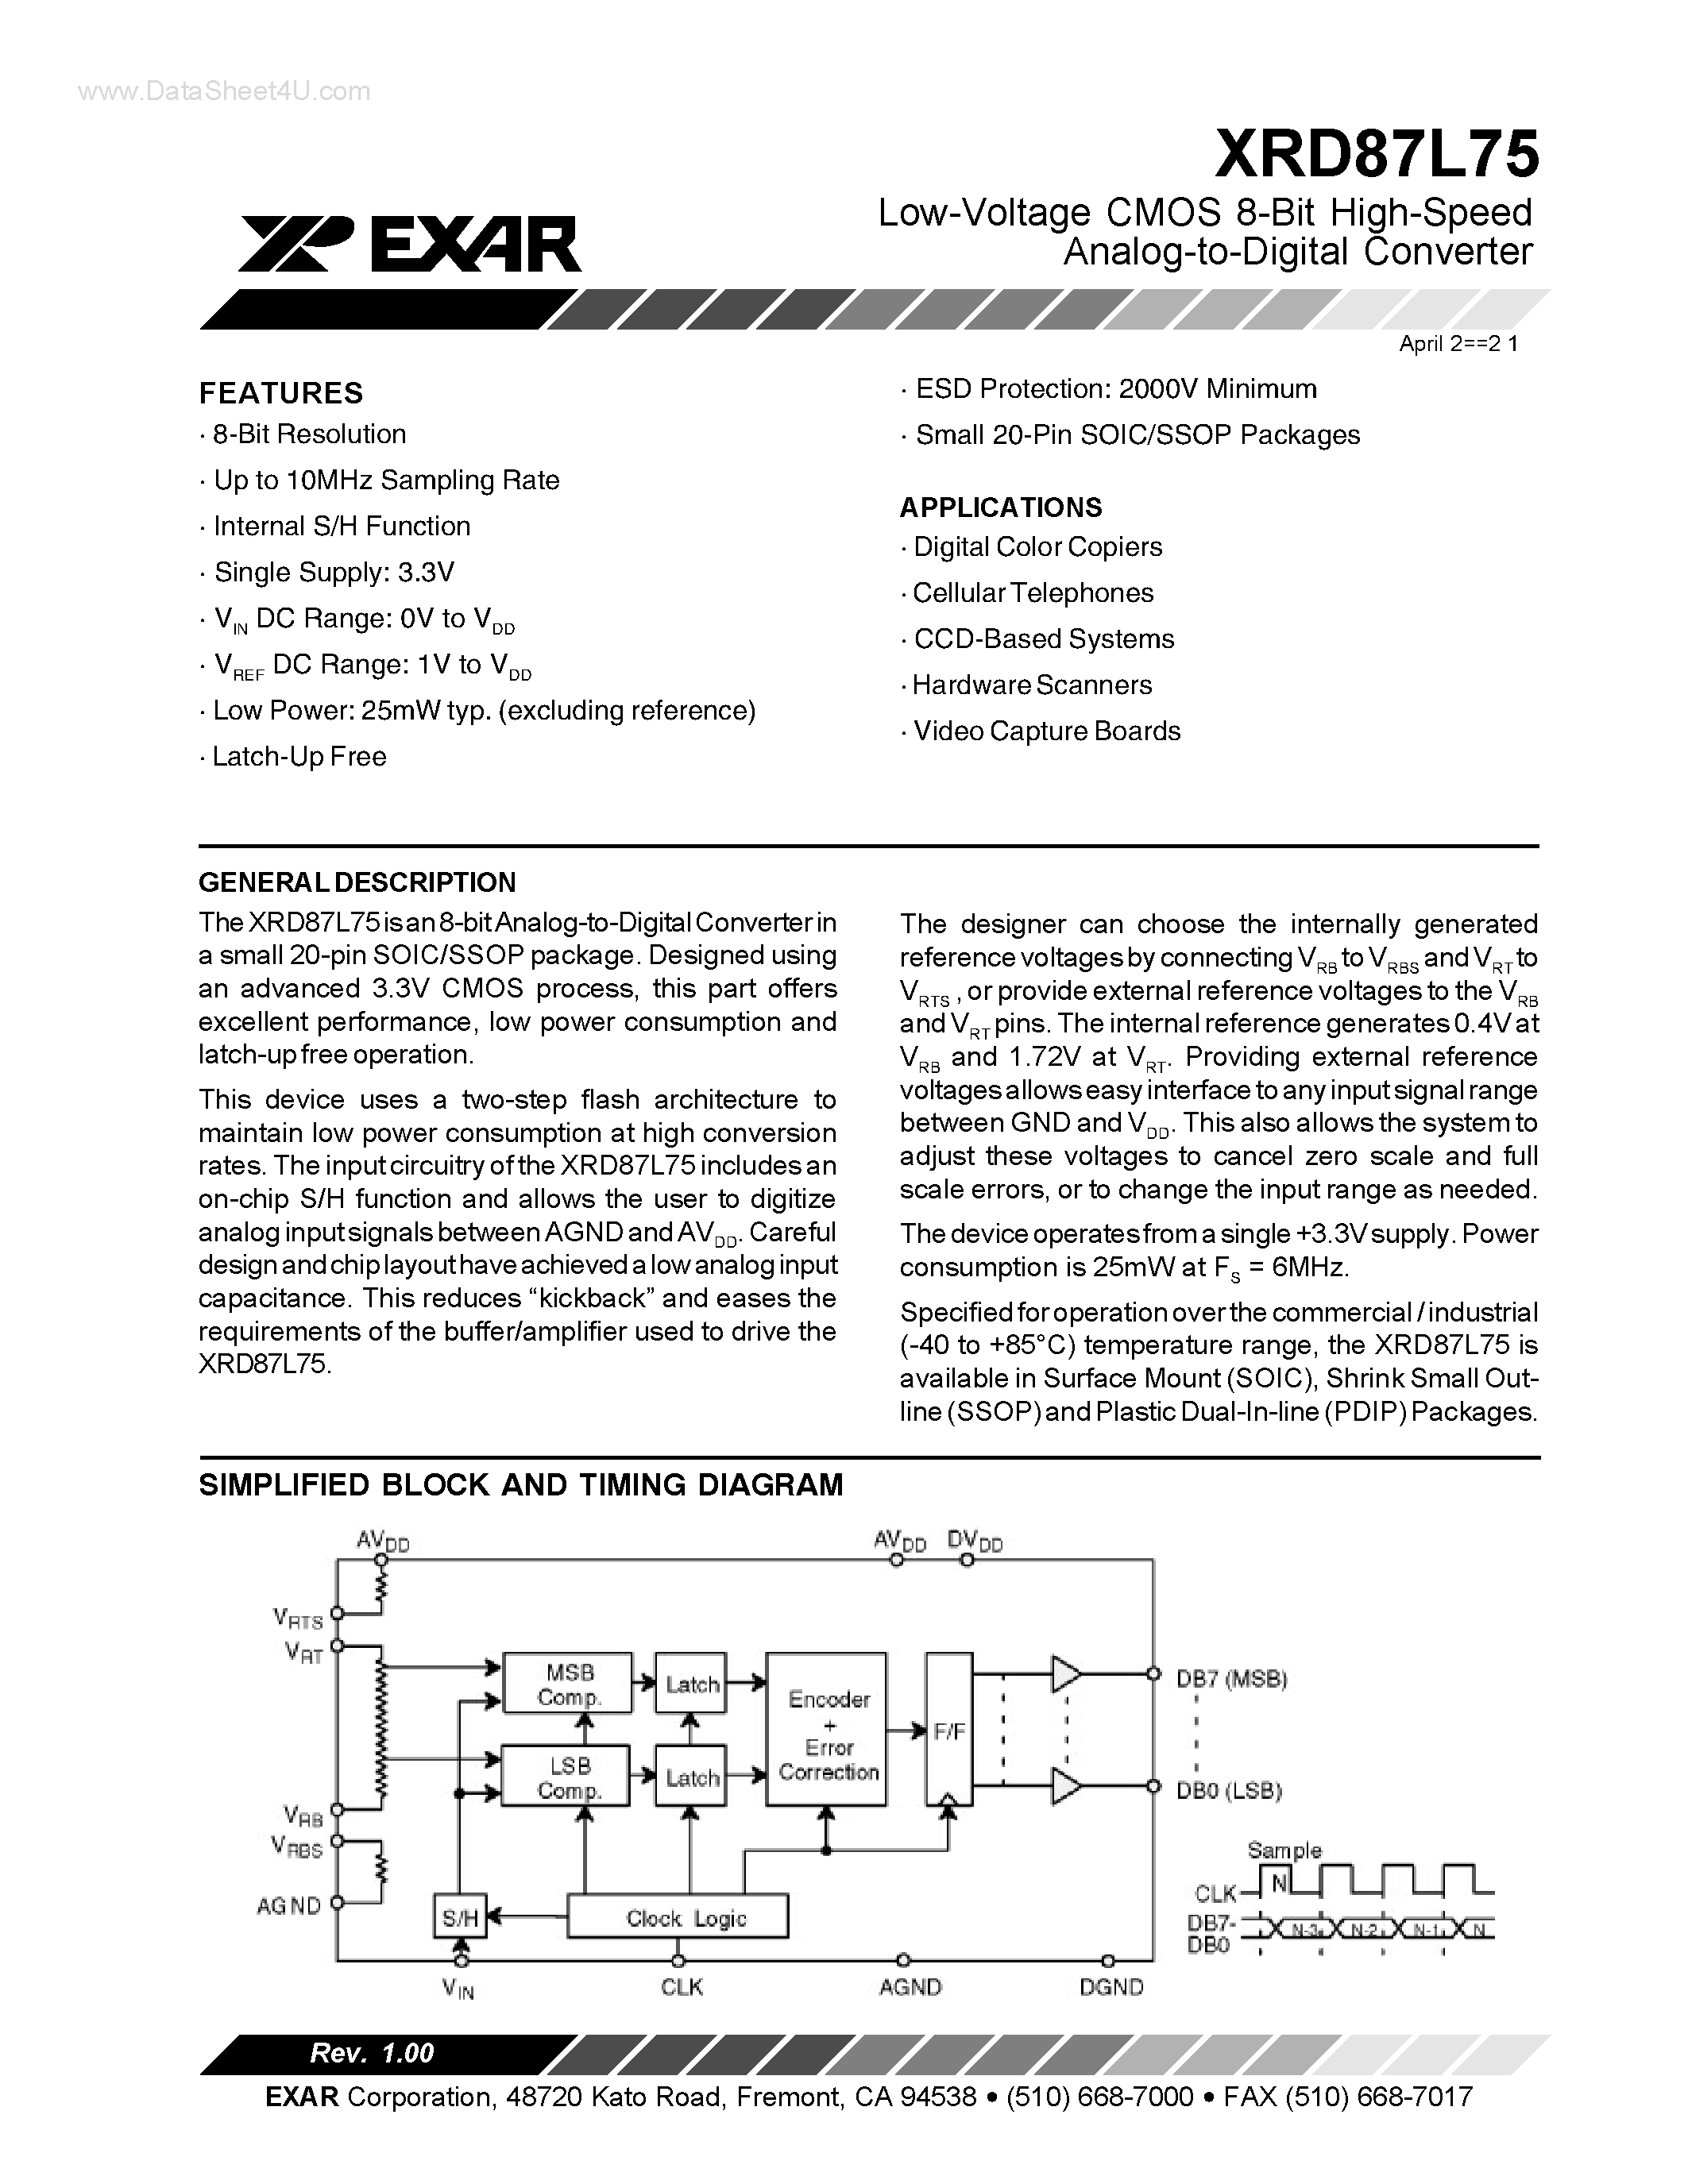 Даташит XRD87L75 - Low-Voltage CMOS 8-Bit High-Speed Analog-to-Digital Converter страница 1